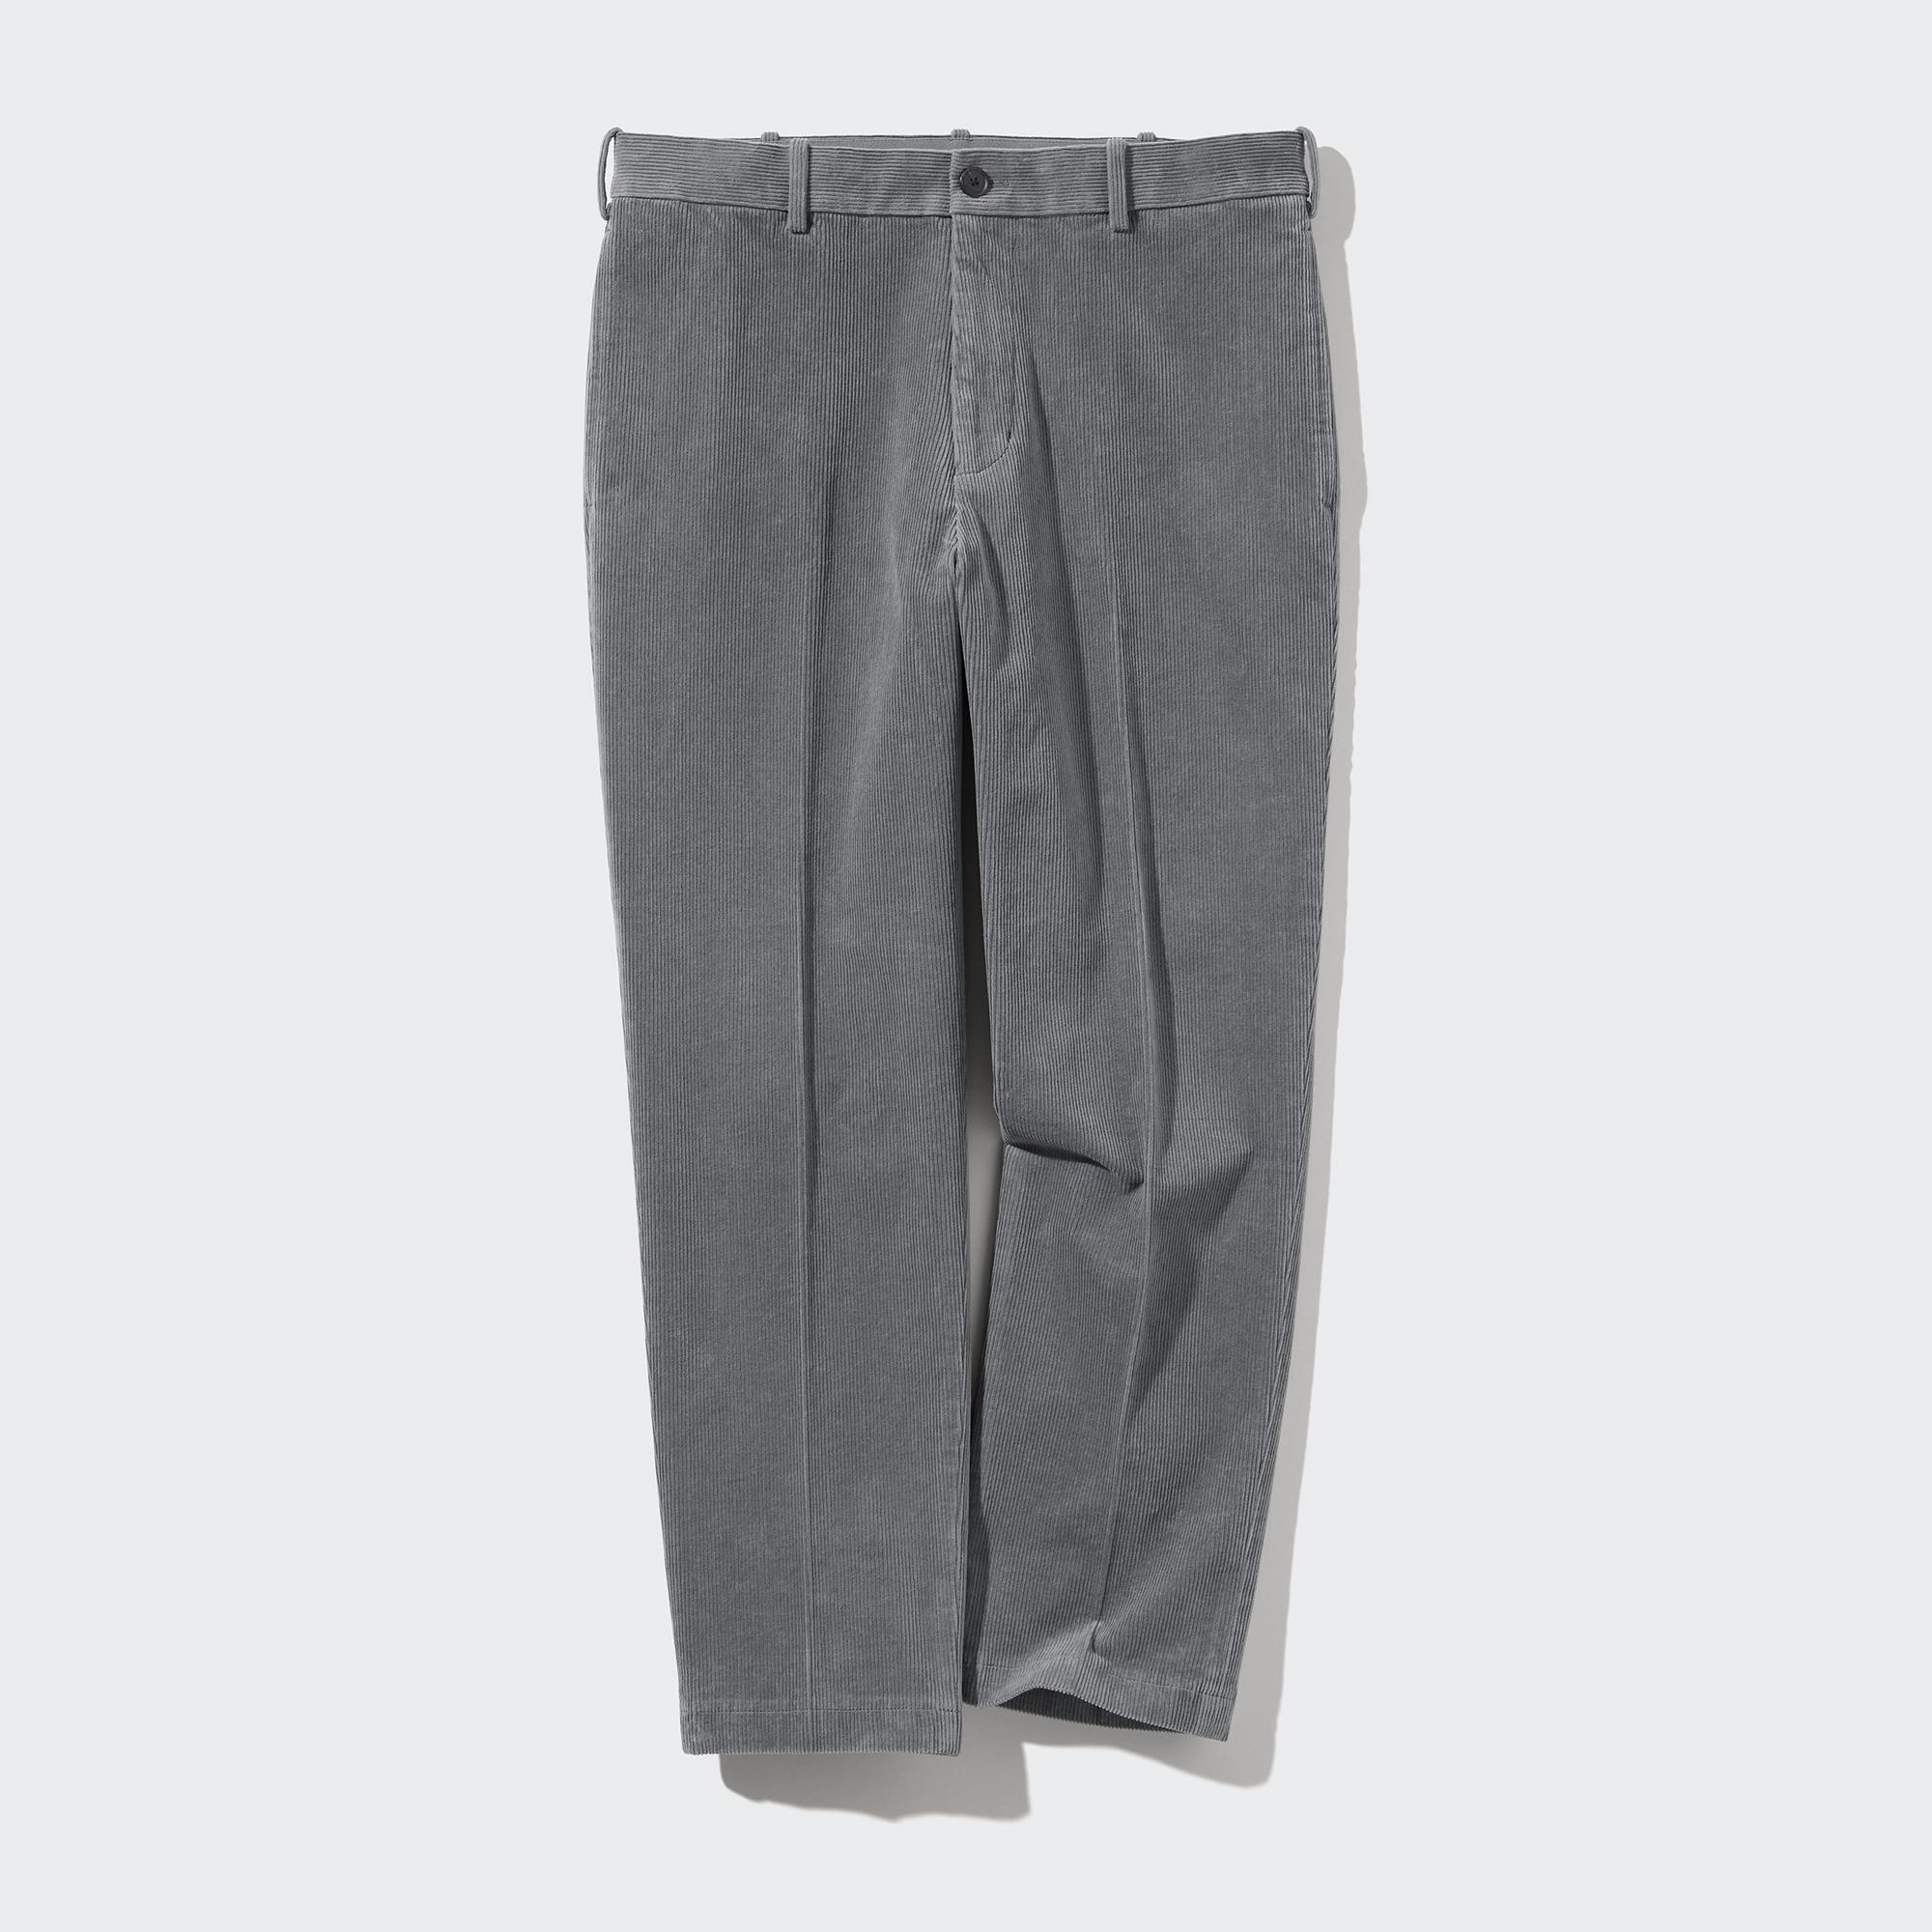 04651/ A TRIP IN A BAG corduroy jogger pants 'Smart Cord Jogg' dark grey |  04651/